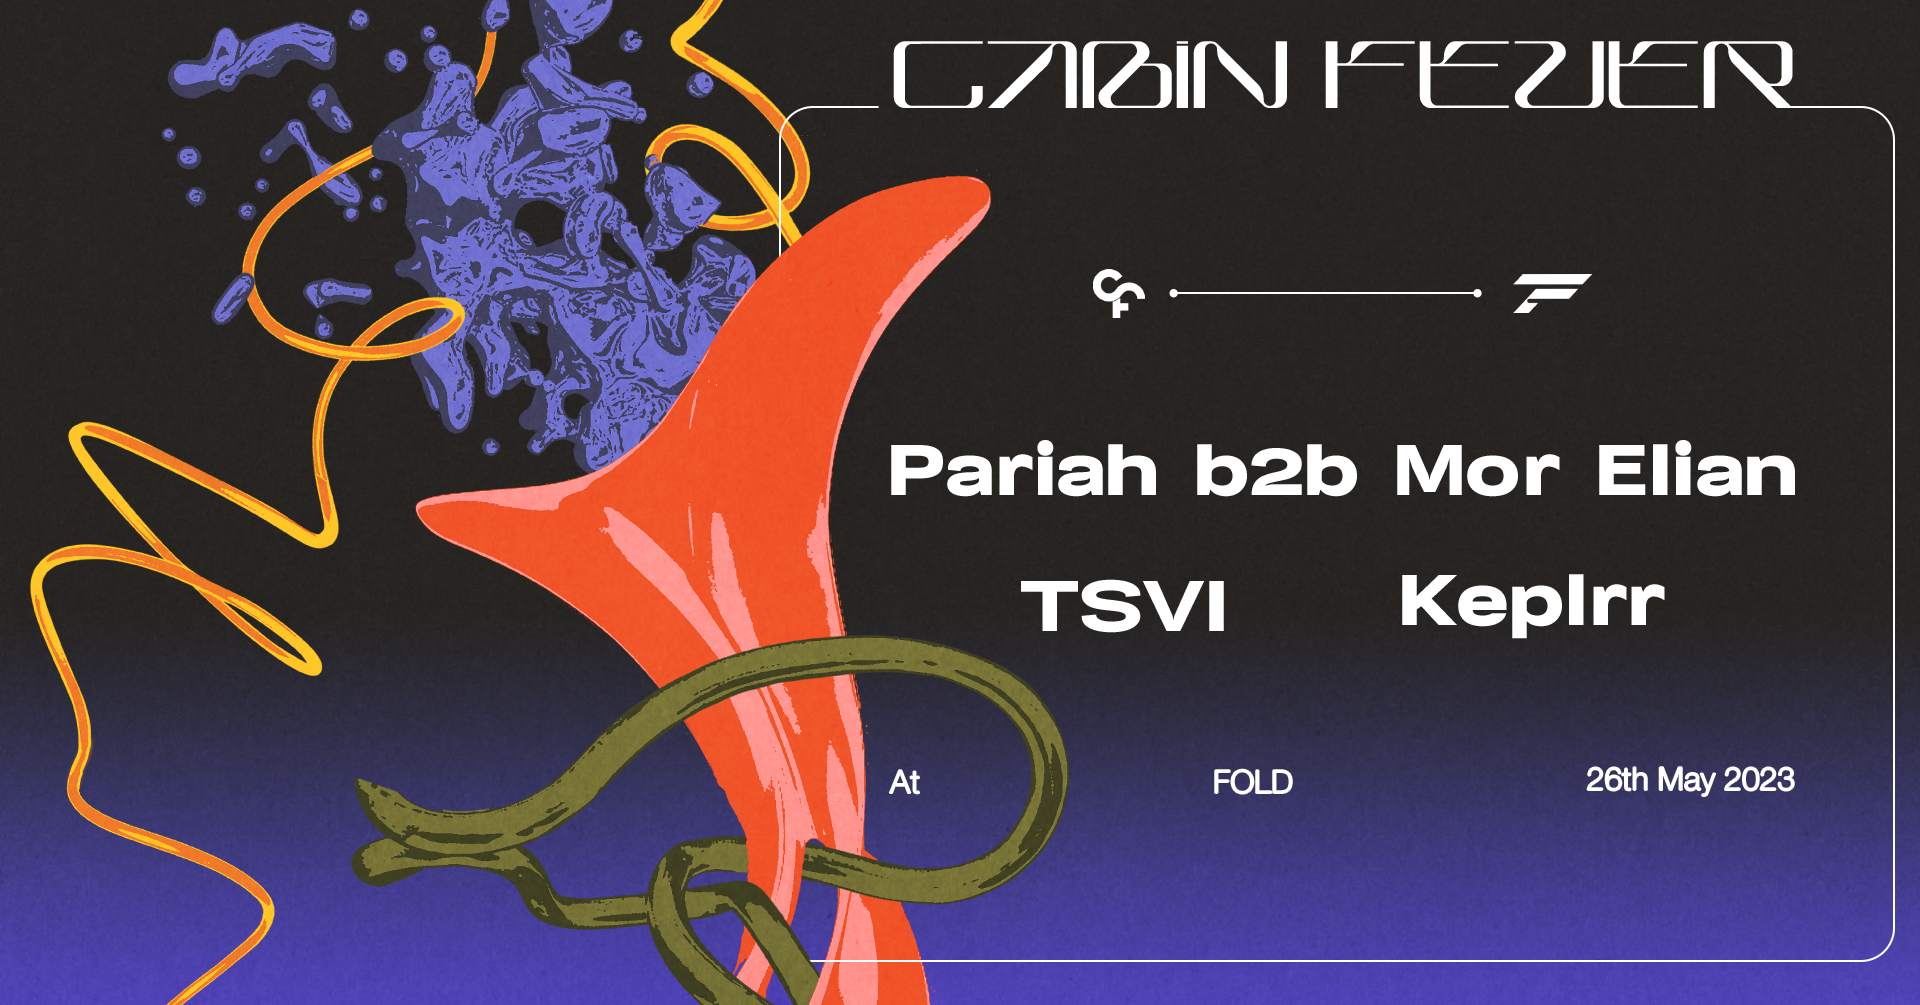 Cabin Fever: Pariah b2b Mor Elian, TSVI & Keplrr - フライヤー表